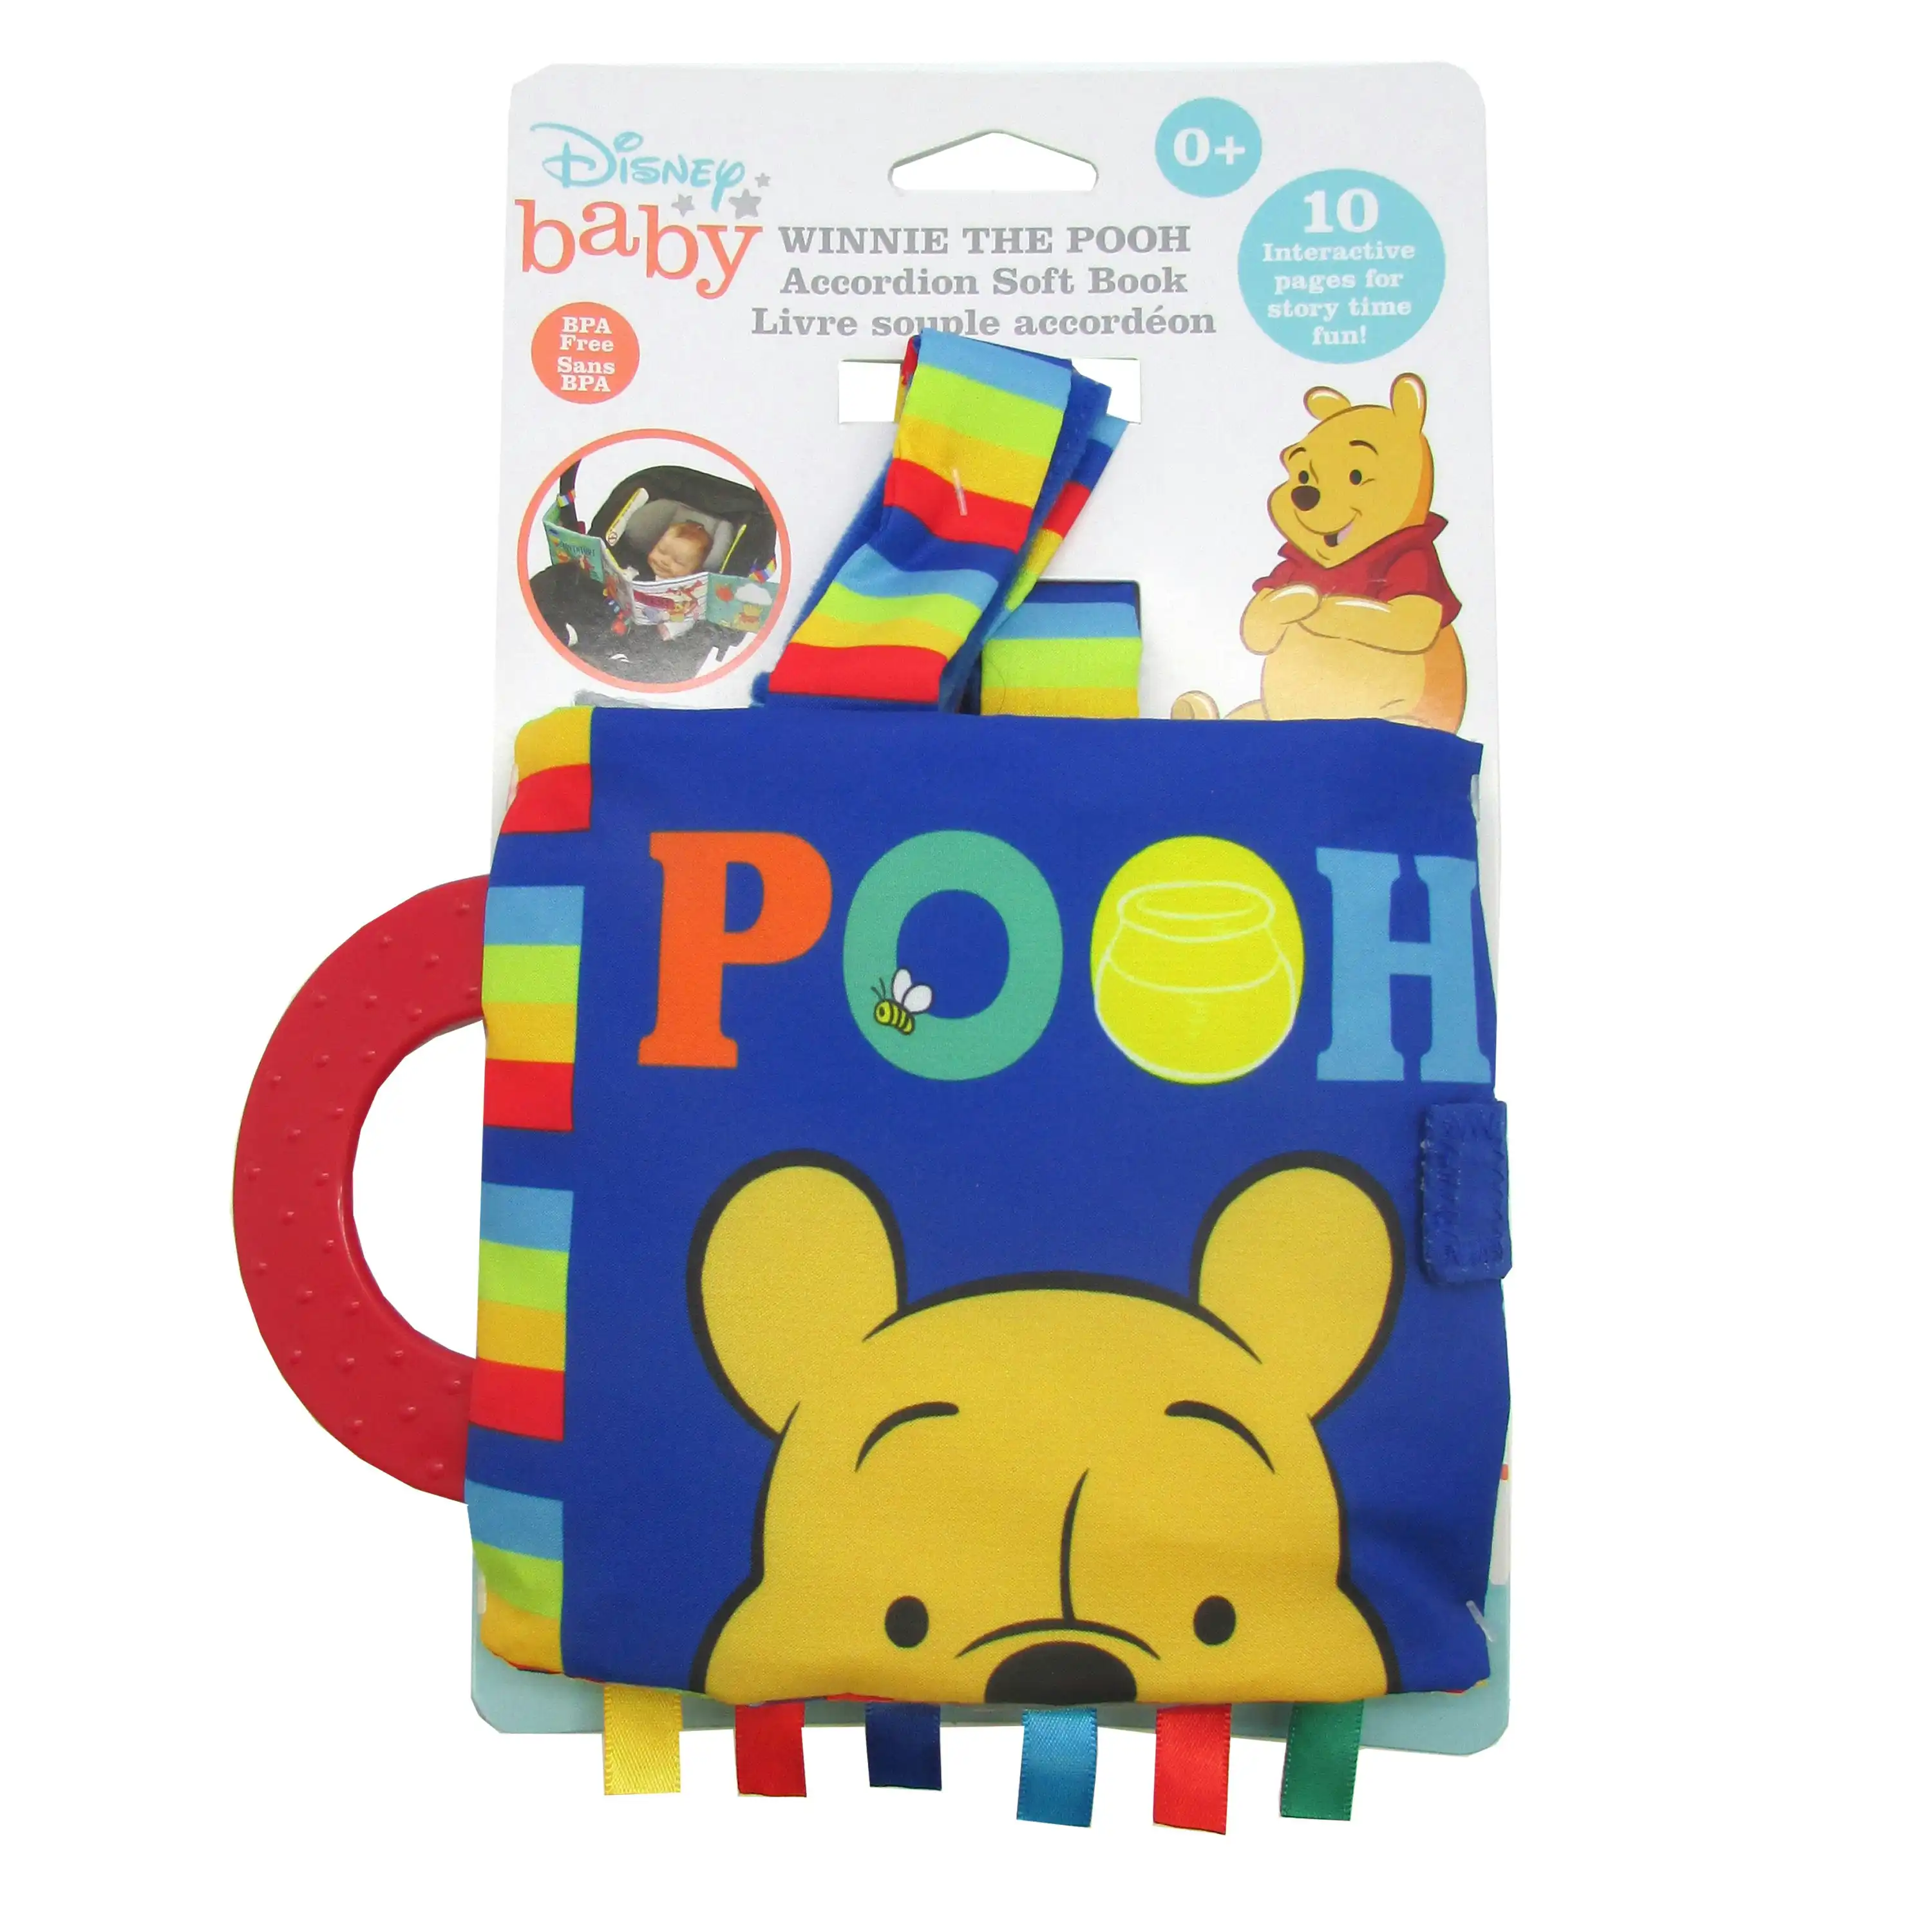 Disney Baby Winnie The Pooh Accordion Soft Book